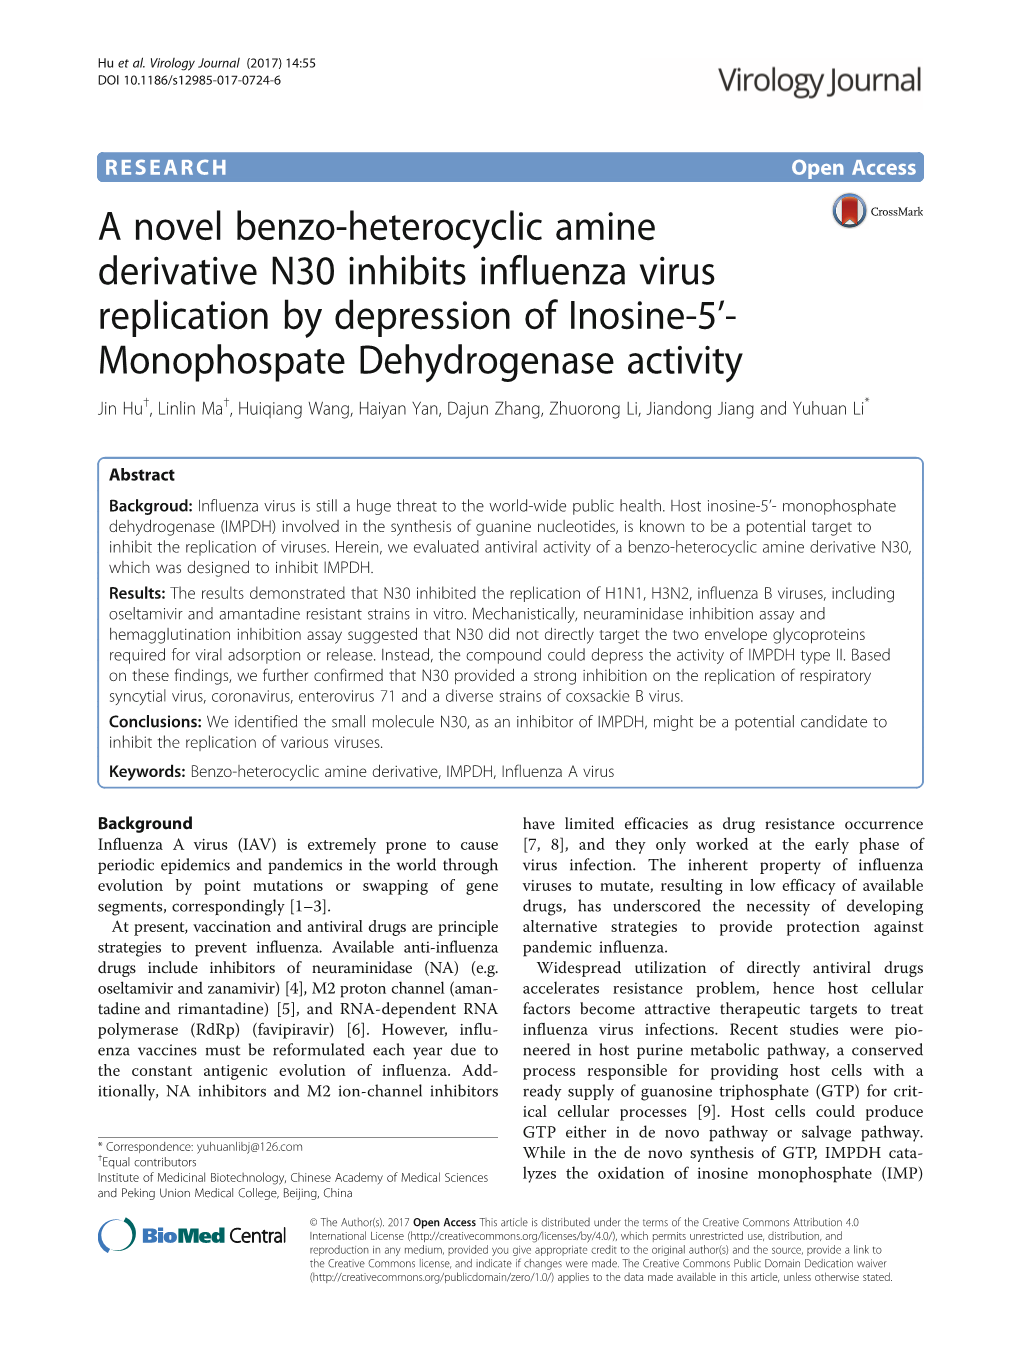 A Novel Benzo-Heterocyclic Amine Derivative N30 Inhibits Influenza